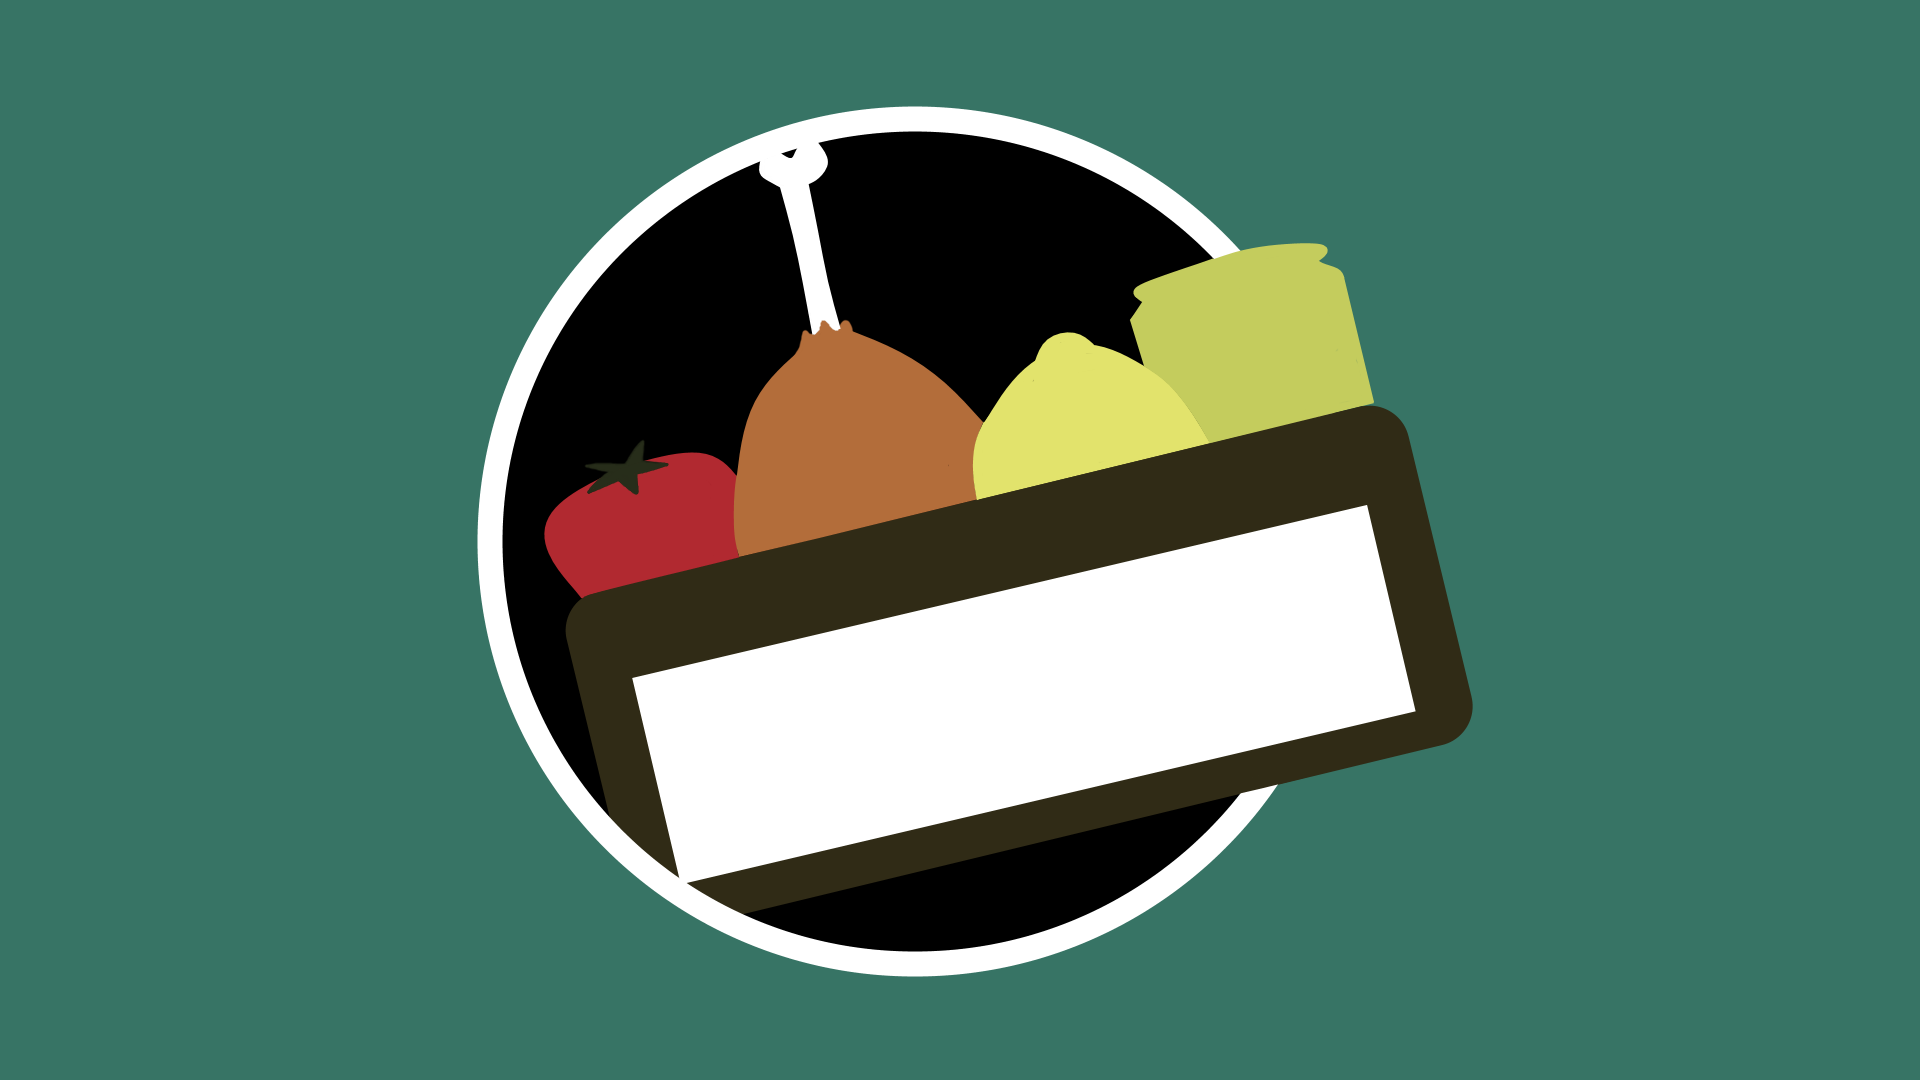 Minimalistic Pop Food Logo that I spent